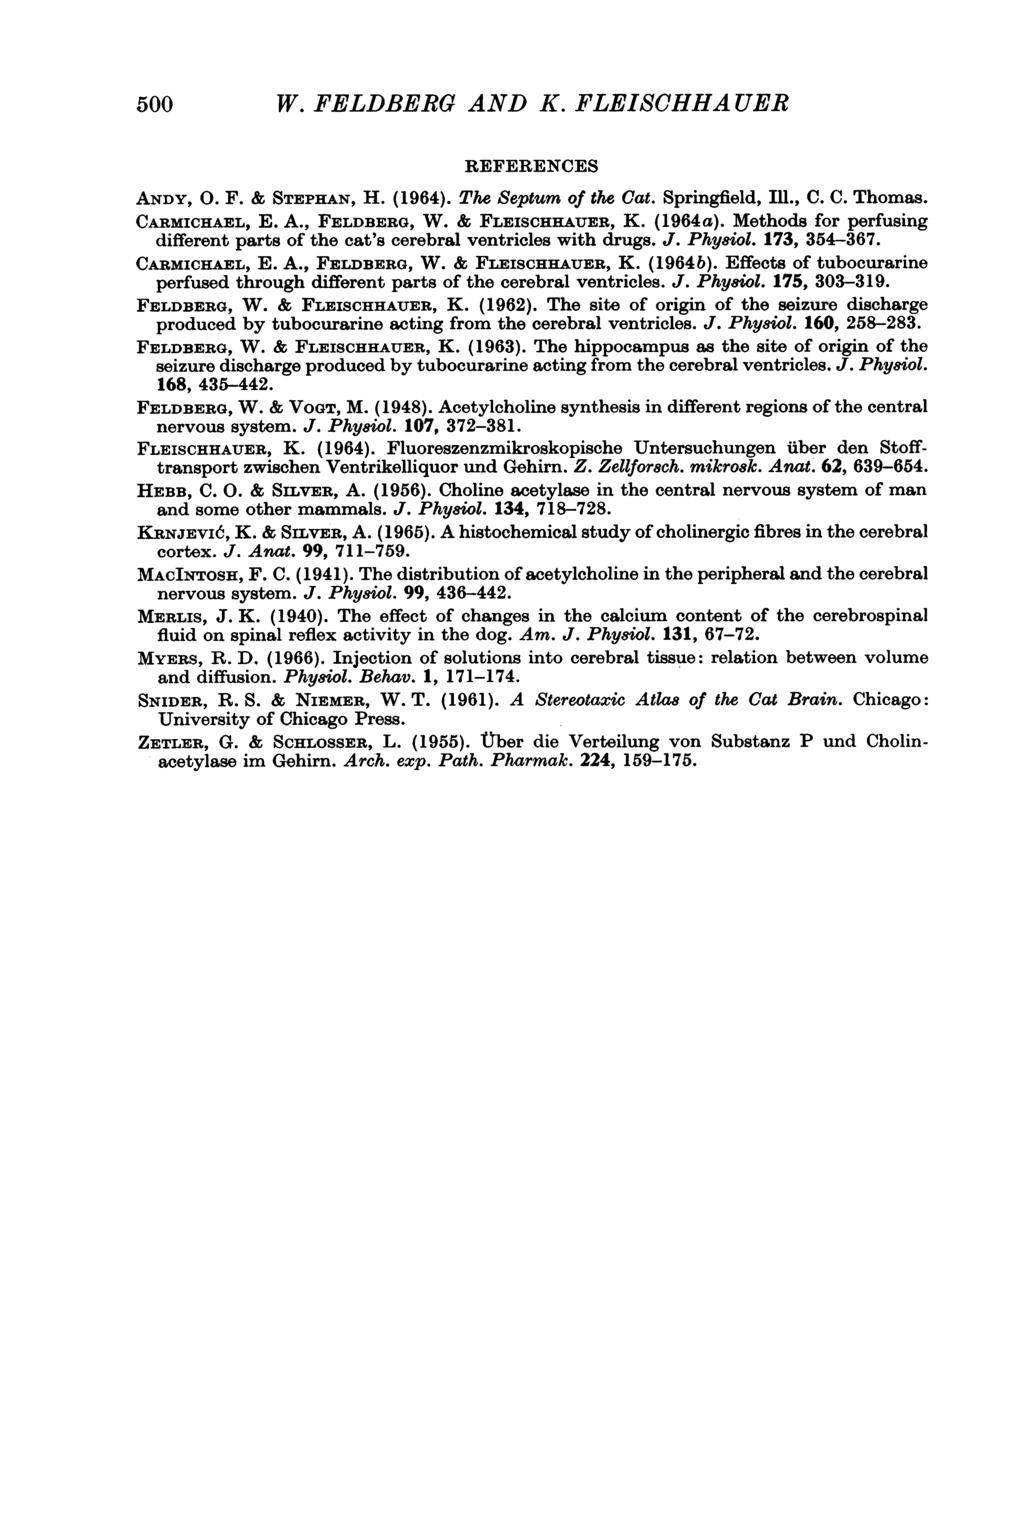 500 W. FELDBERG AND K. FLEISCHHA UER REFERENCES ANDY, 0. F. & STEPHAN, H. (1964). The Septum of the Cat. Springfield, Ill., C. C. Thomas. CARMICHAEL, E. A., FELDBERG, W. & FLEISCHHAUER, K. (1964a).